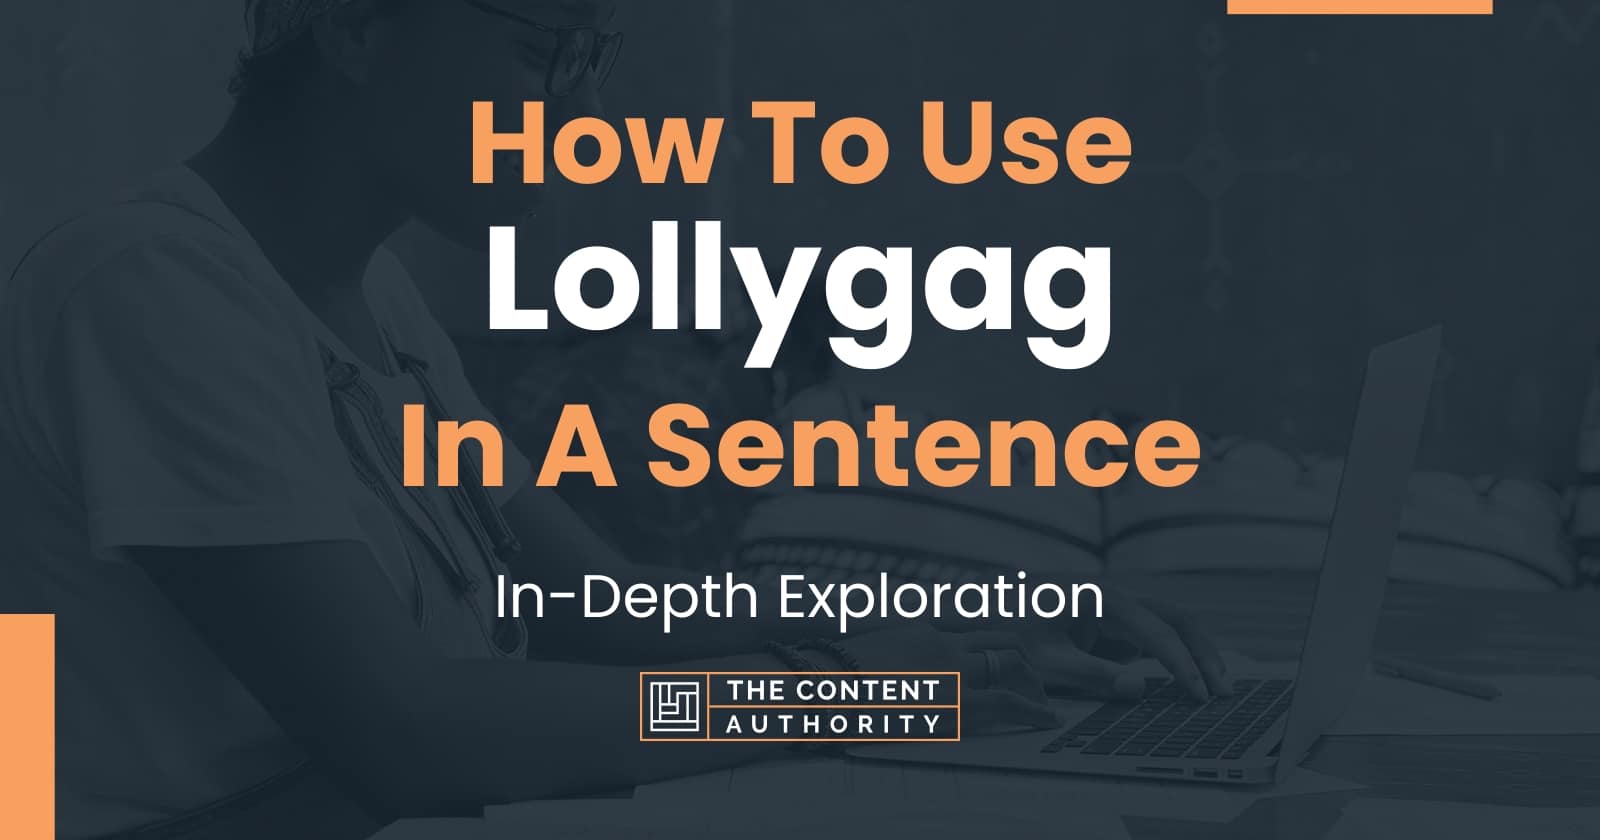 Let's discuss: Lollygaggin Lollygaggin' is one of my best skills